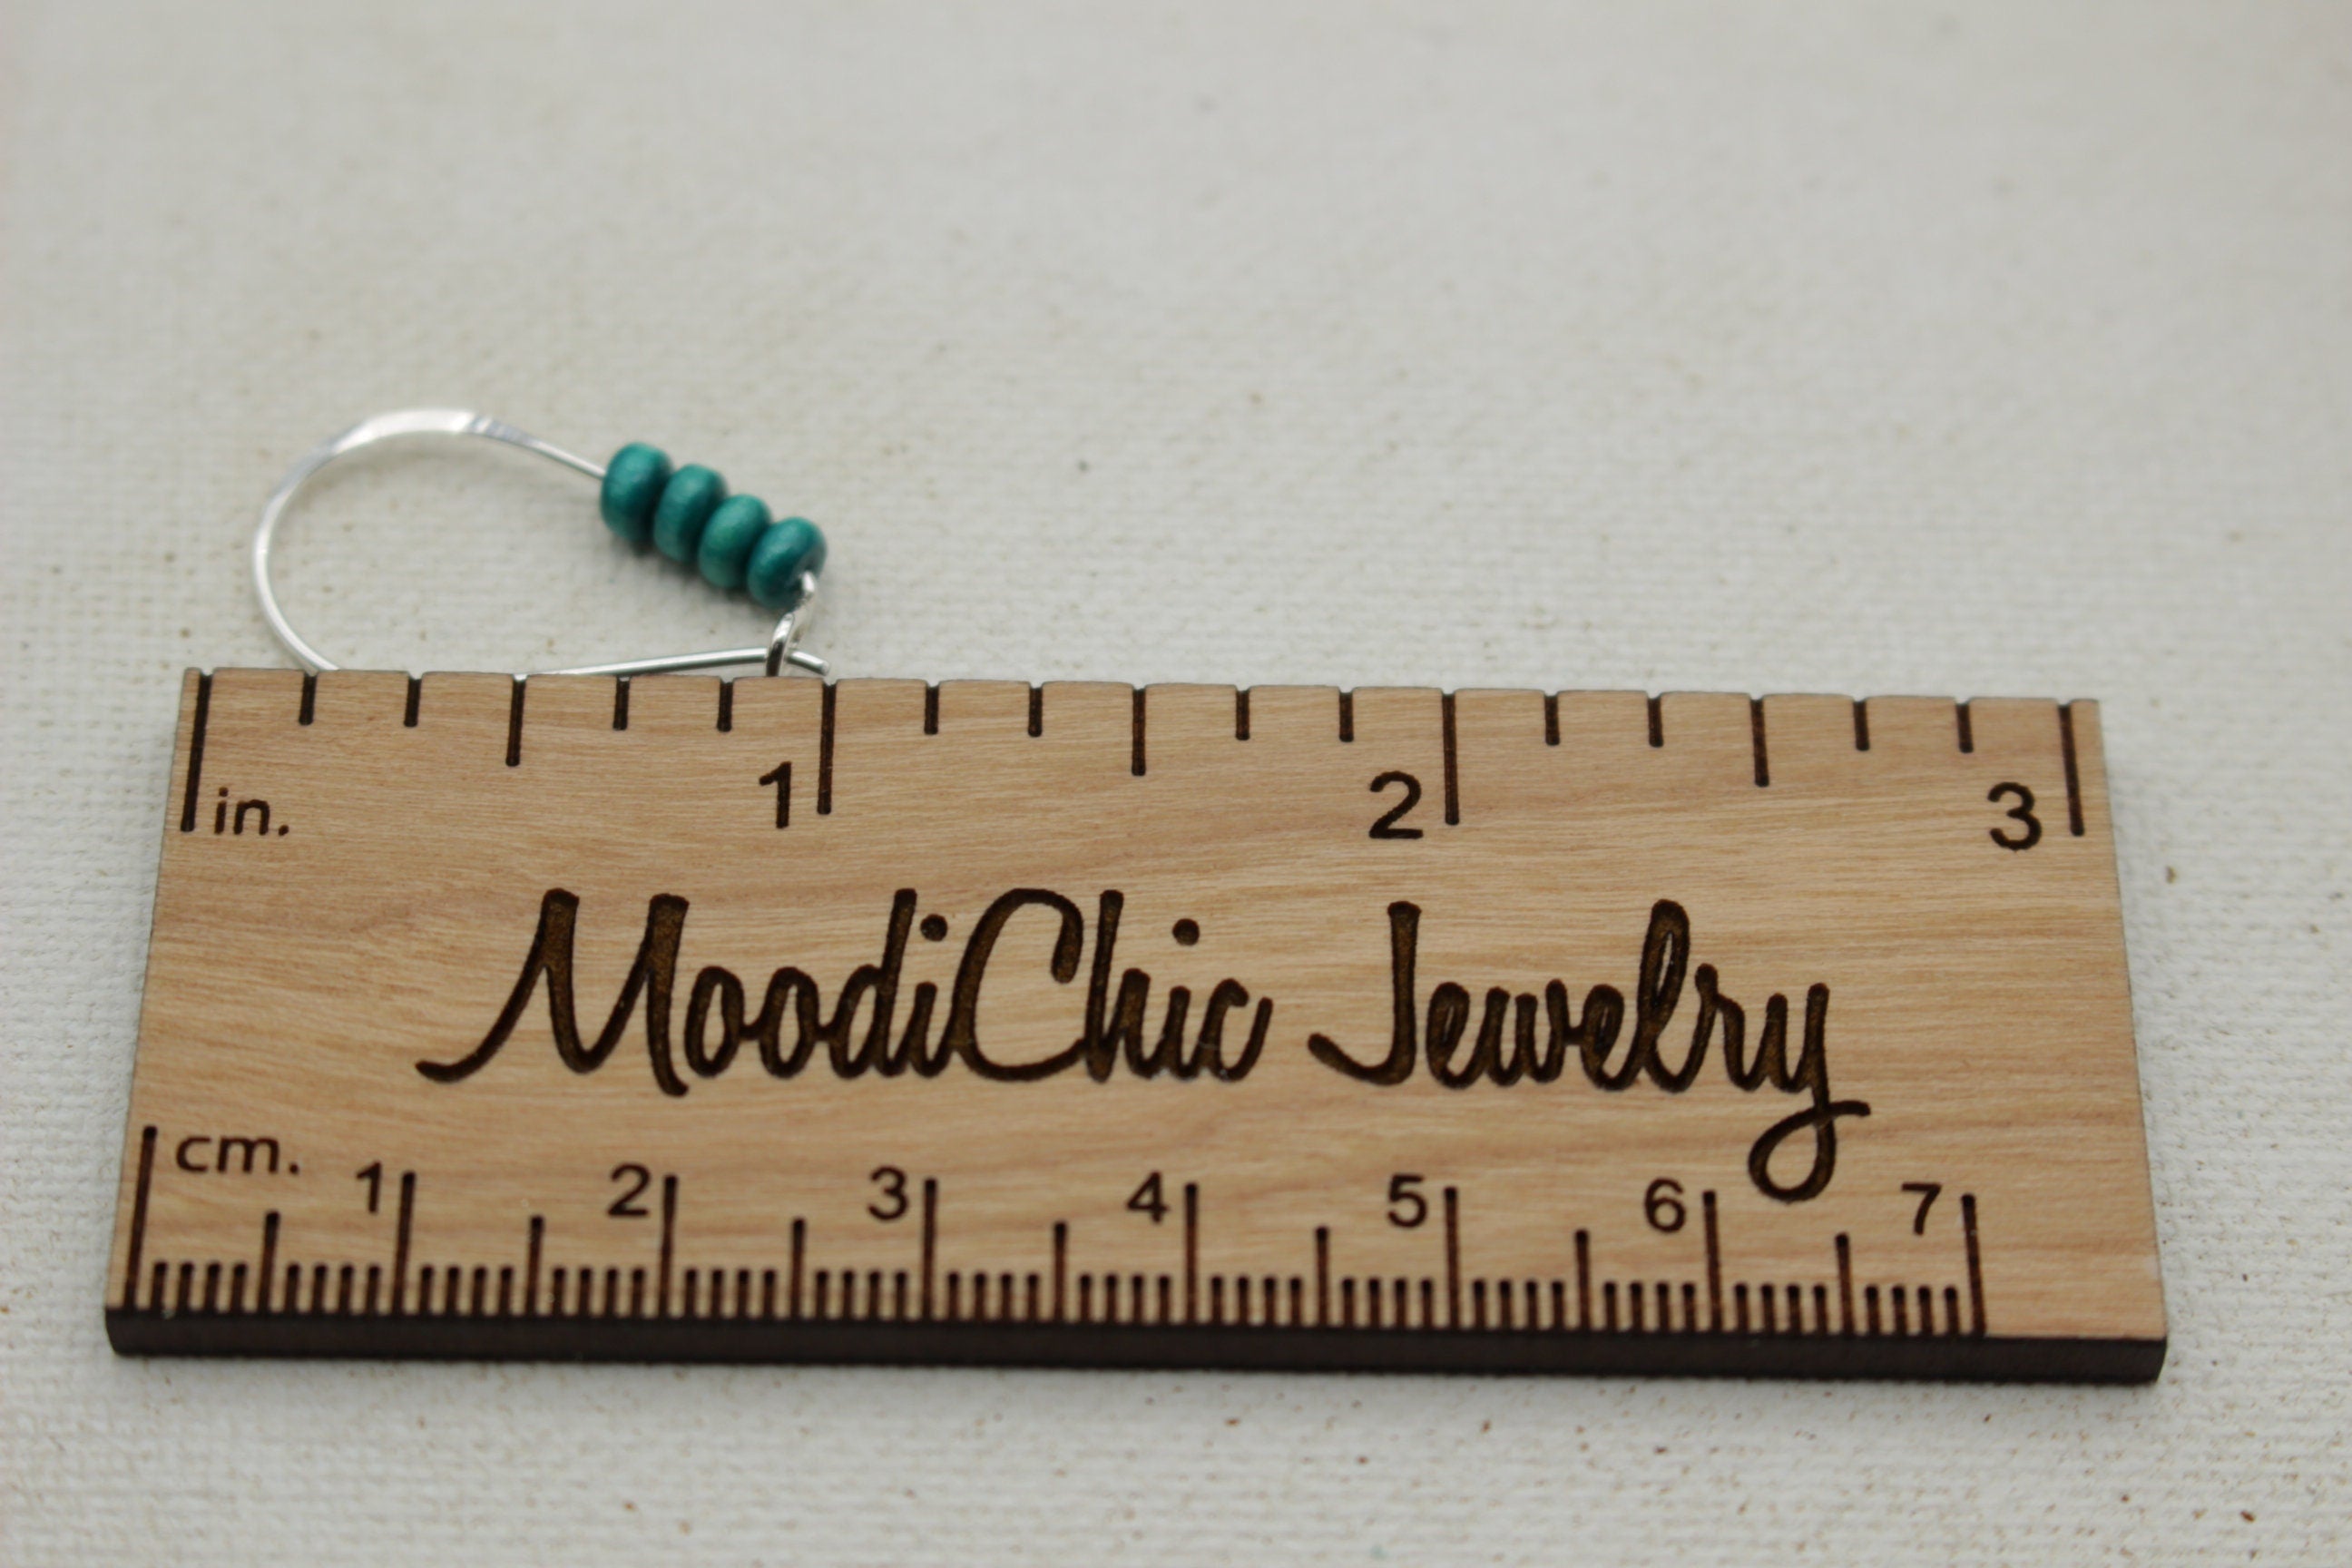 Turquoise wooden simple Hoops - Sterling Silver Hoop Earrings - Gift for Her - Jewelry Sale - Small wooden beaded Hoops - Dangle Earrings